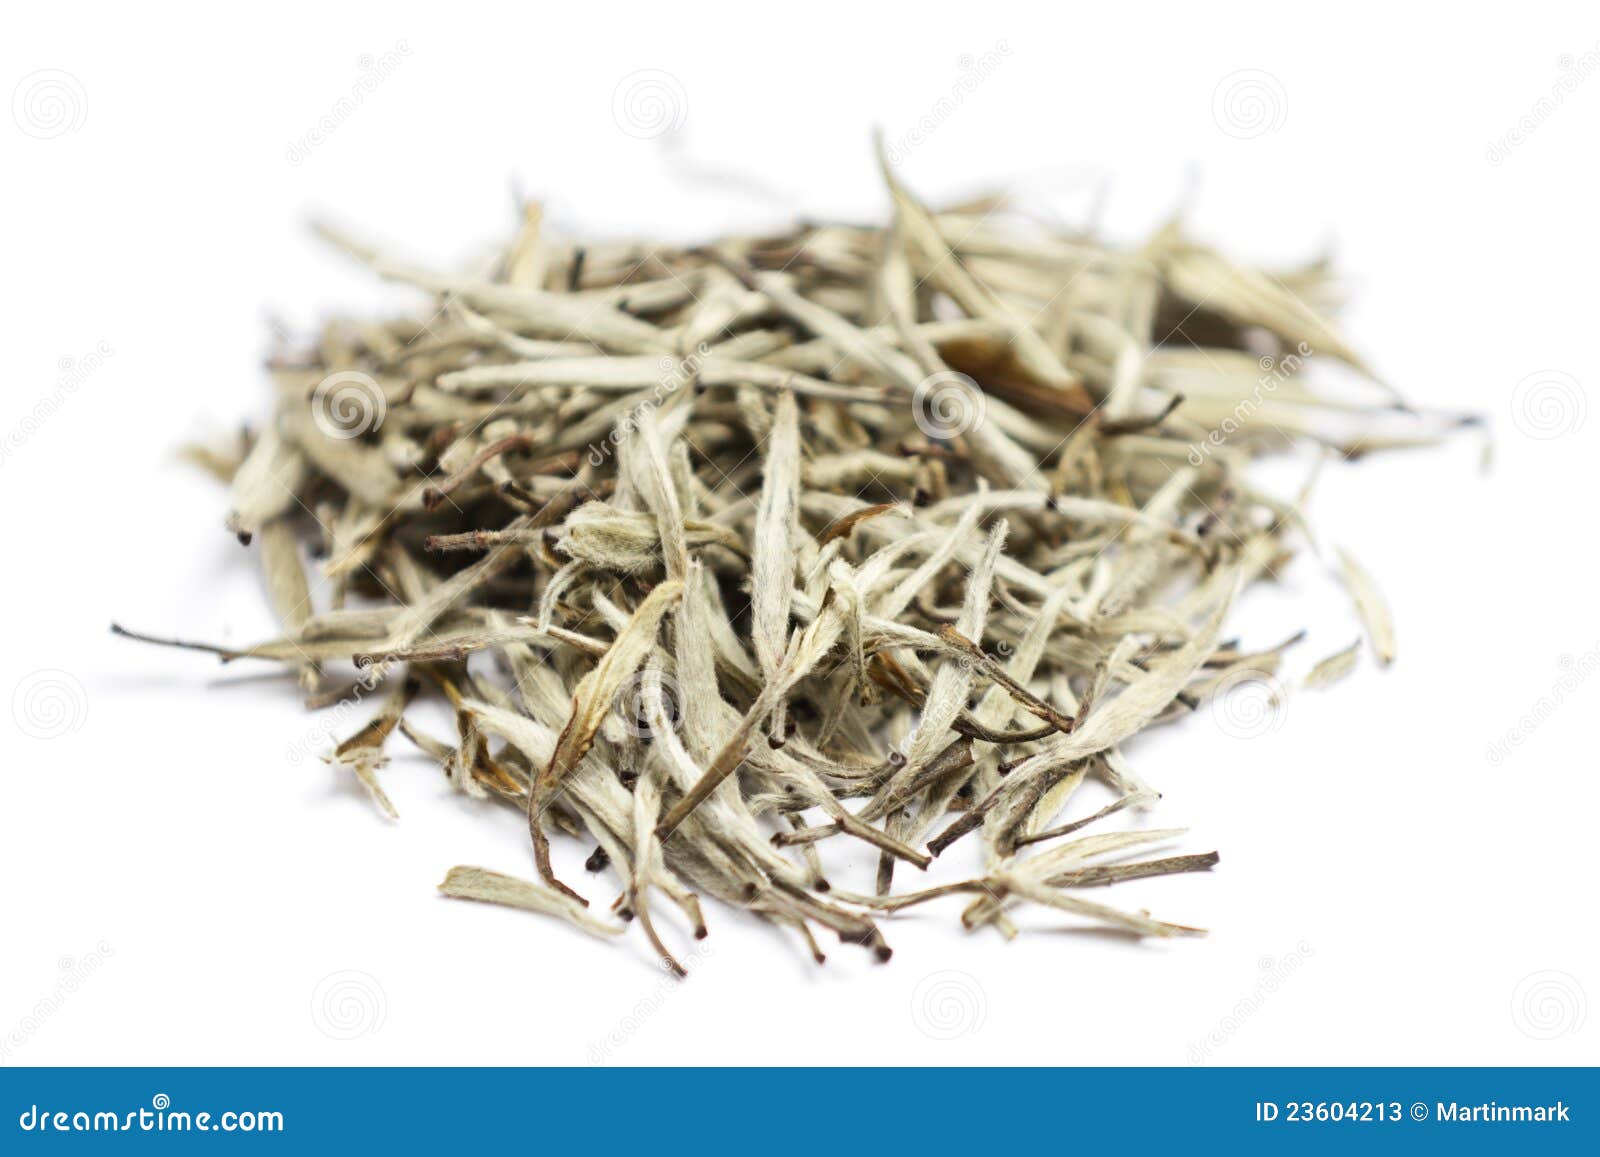 Tea - white tea leaves stock image. Image of dried, health - 23604213